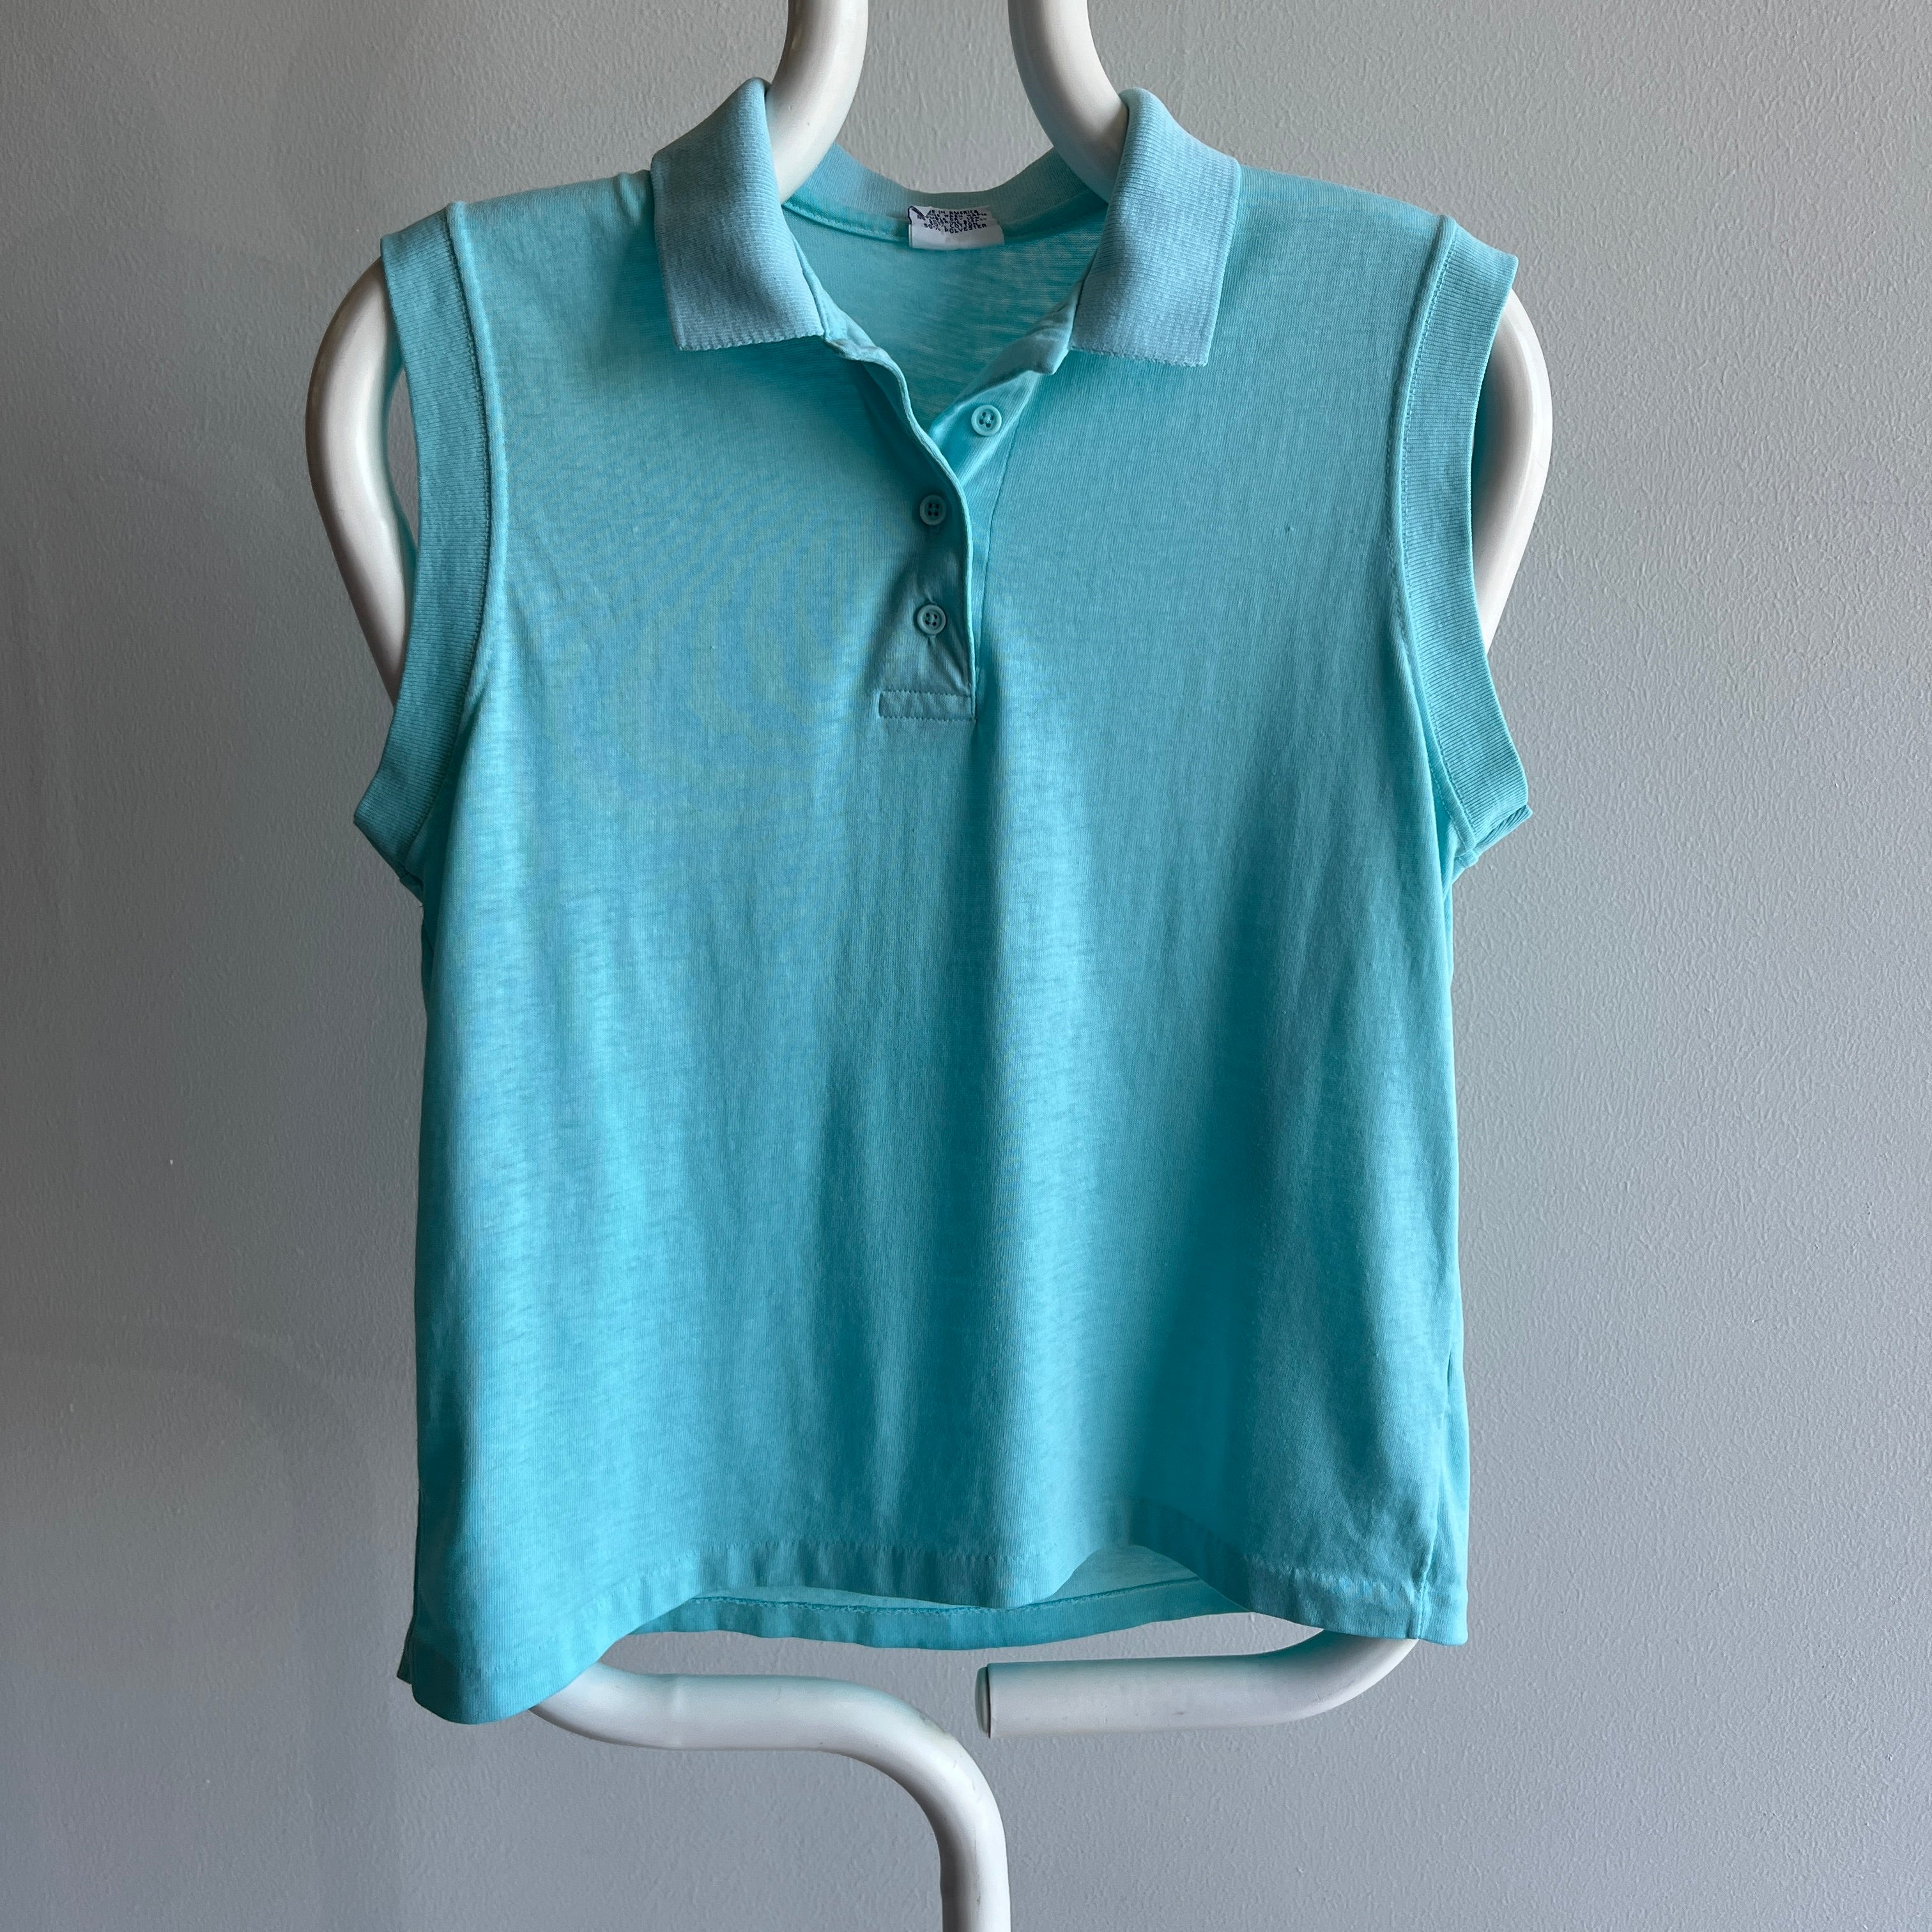 1980s Thinned Out Tank Top Polo Shirt - Aqua Blue - So Sweet